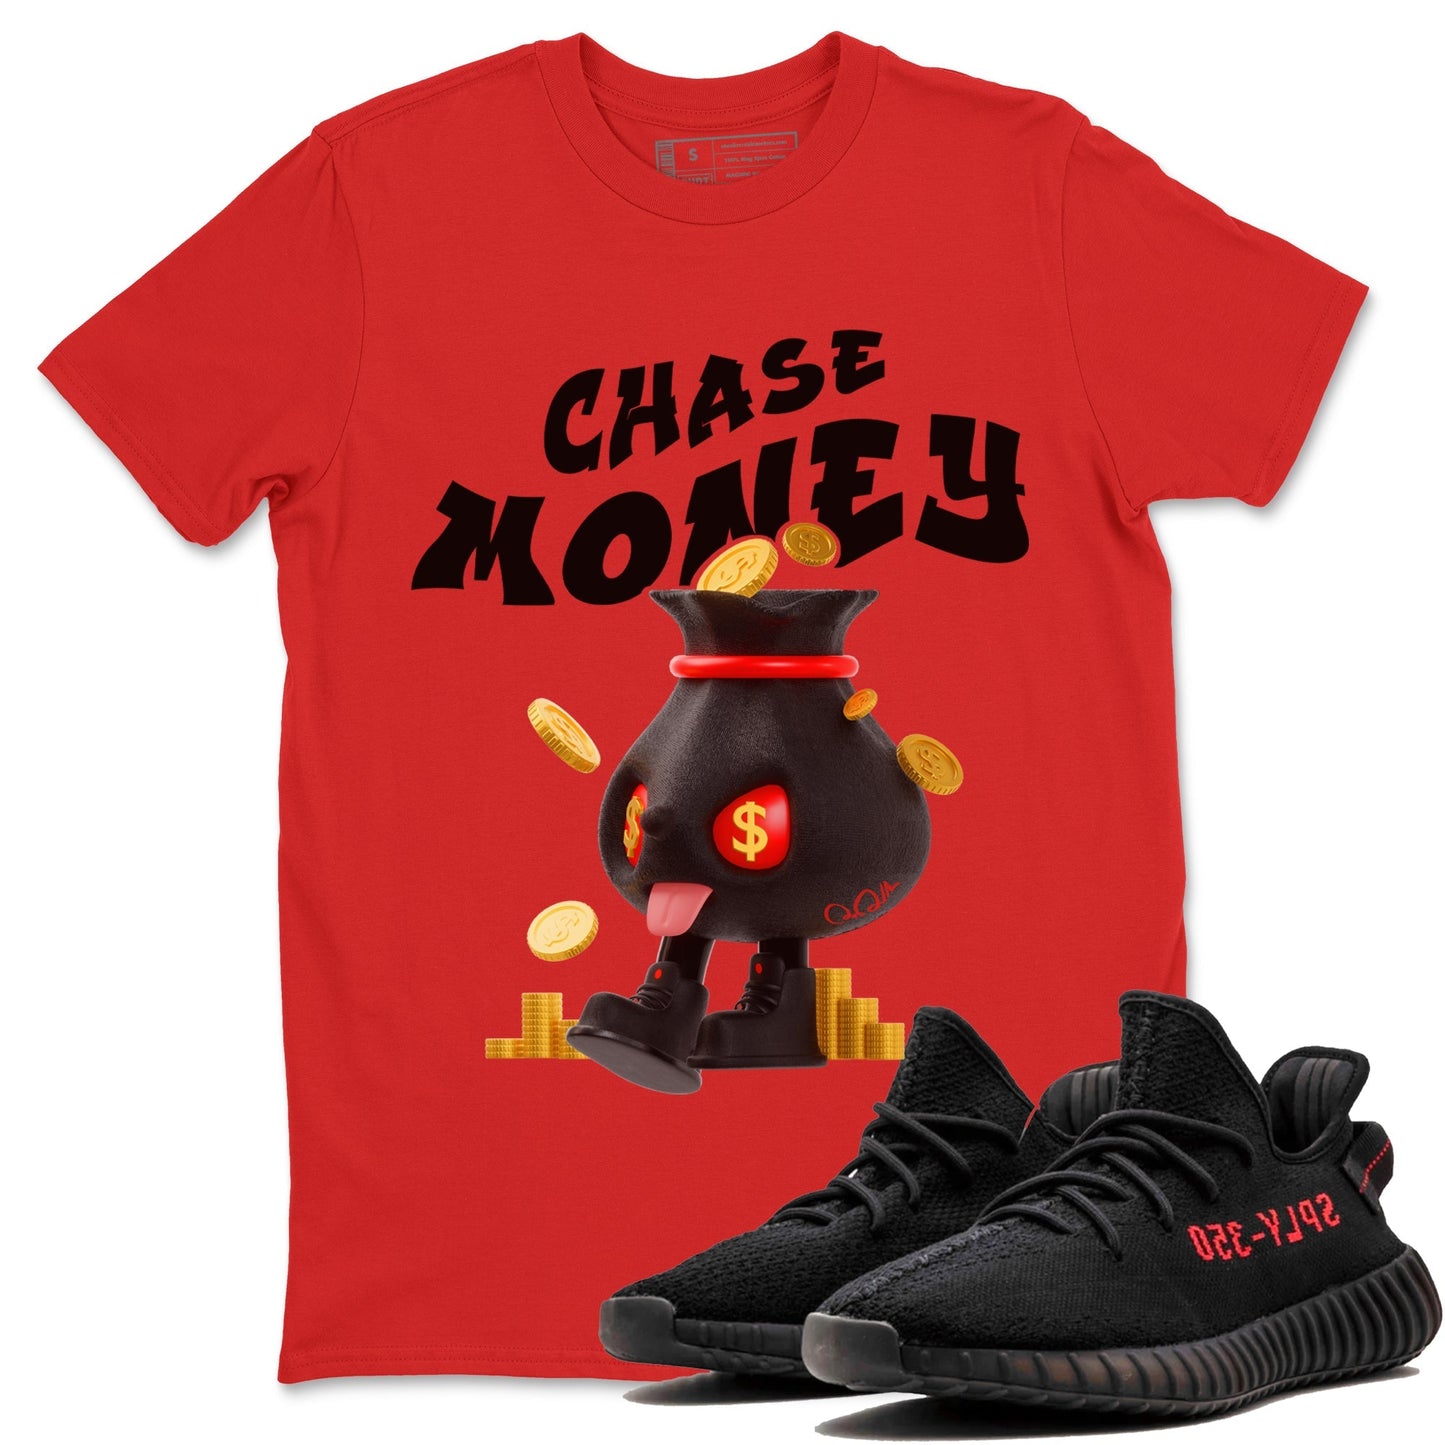 Yeezy 350 Bred shirt to match jordans Chase Money Streetwear Sneaker Shirt Adidas Yeezy 350 V2 Boost Bred Drip Gear Zone Sneaker Matching Clothing Unisex Red 1 T-Shirt